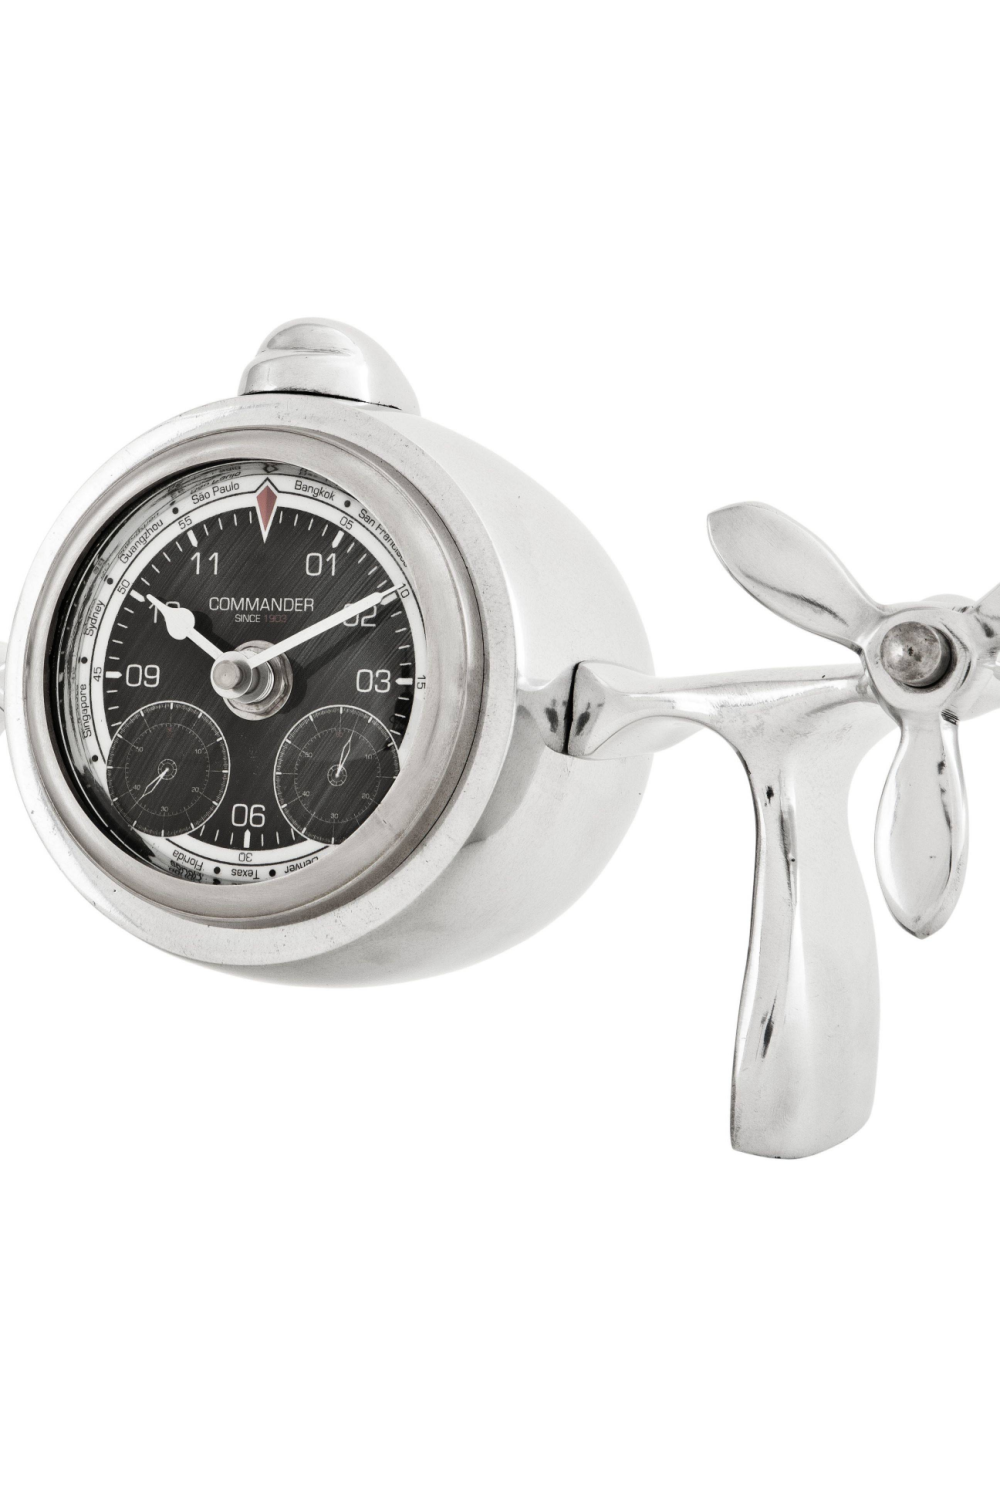 Propeller Clock | Eichholtz Commander | OROA